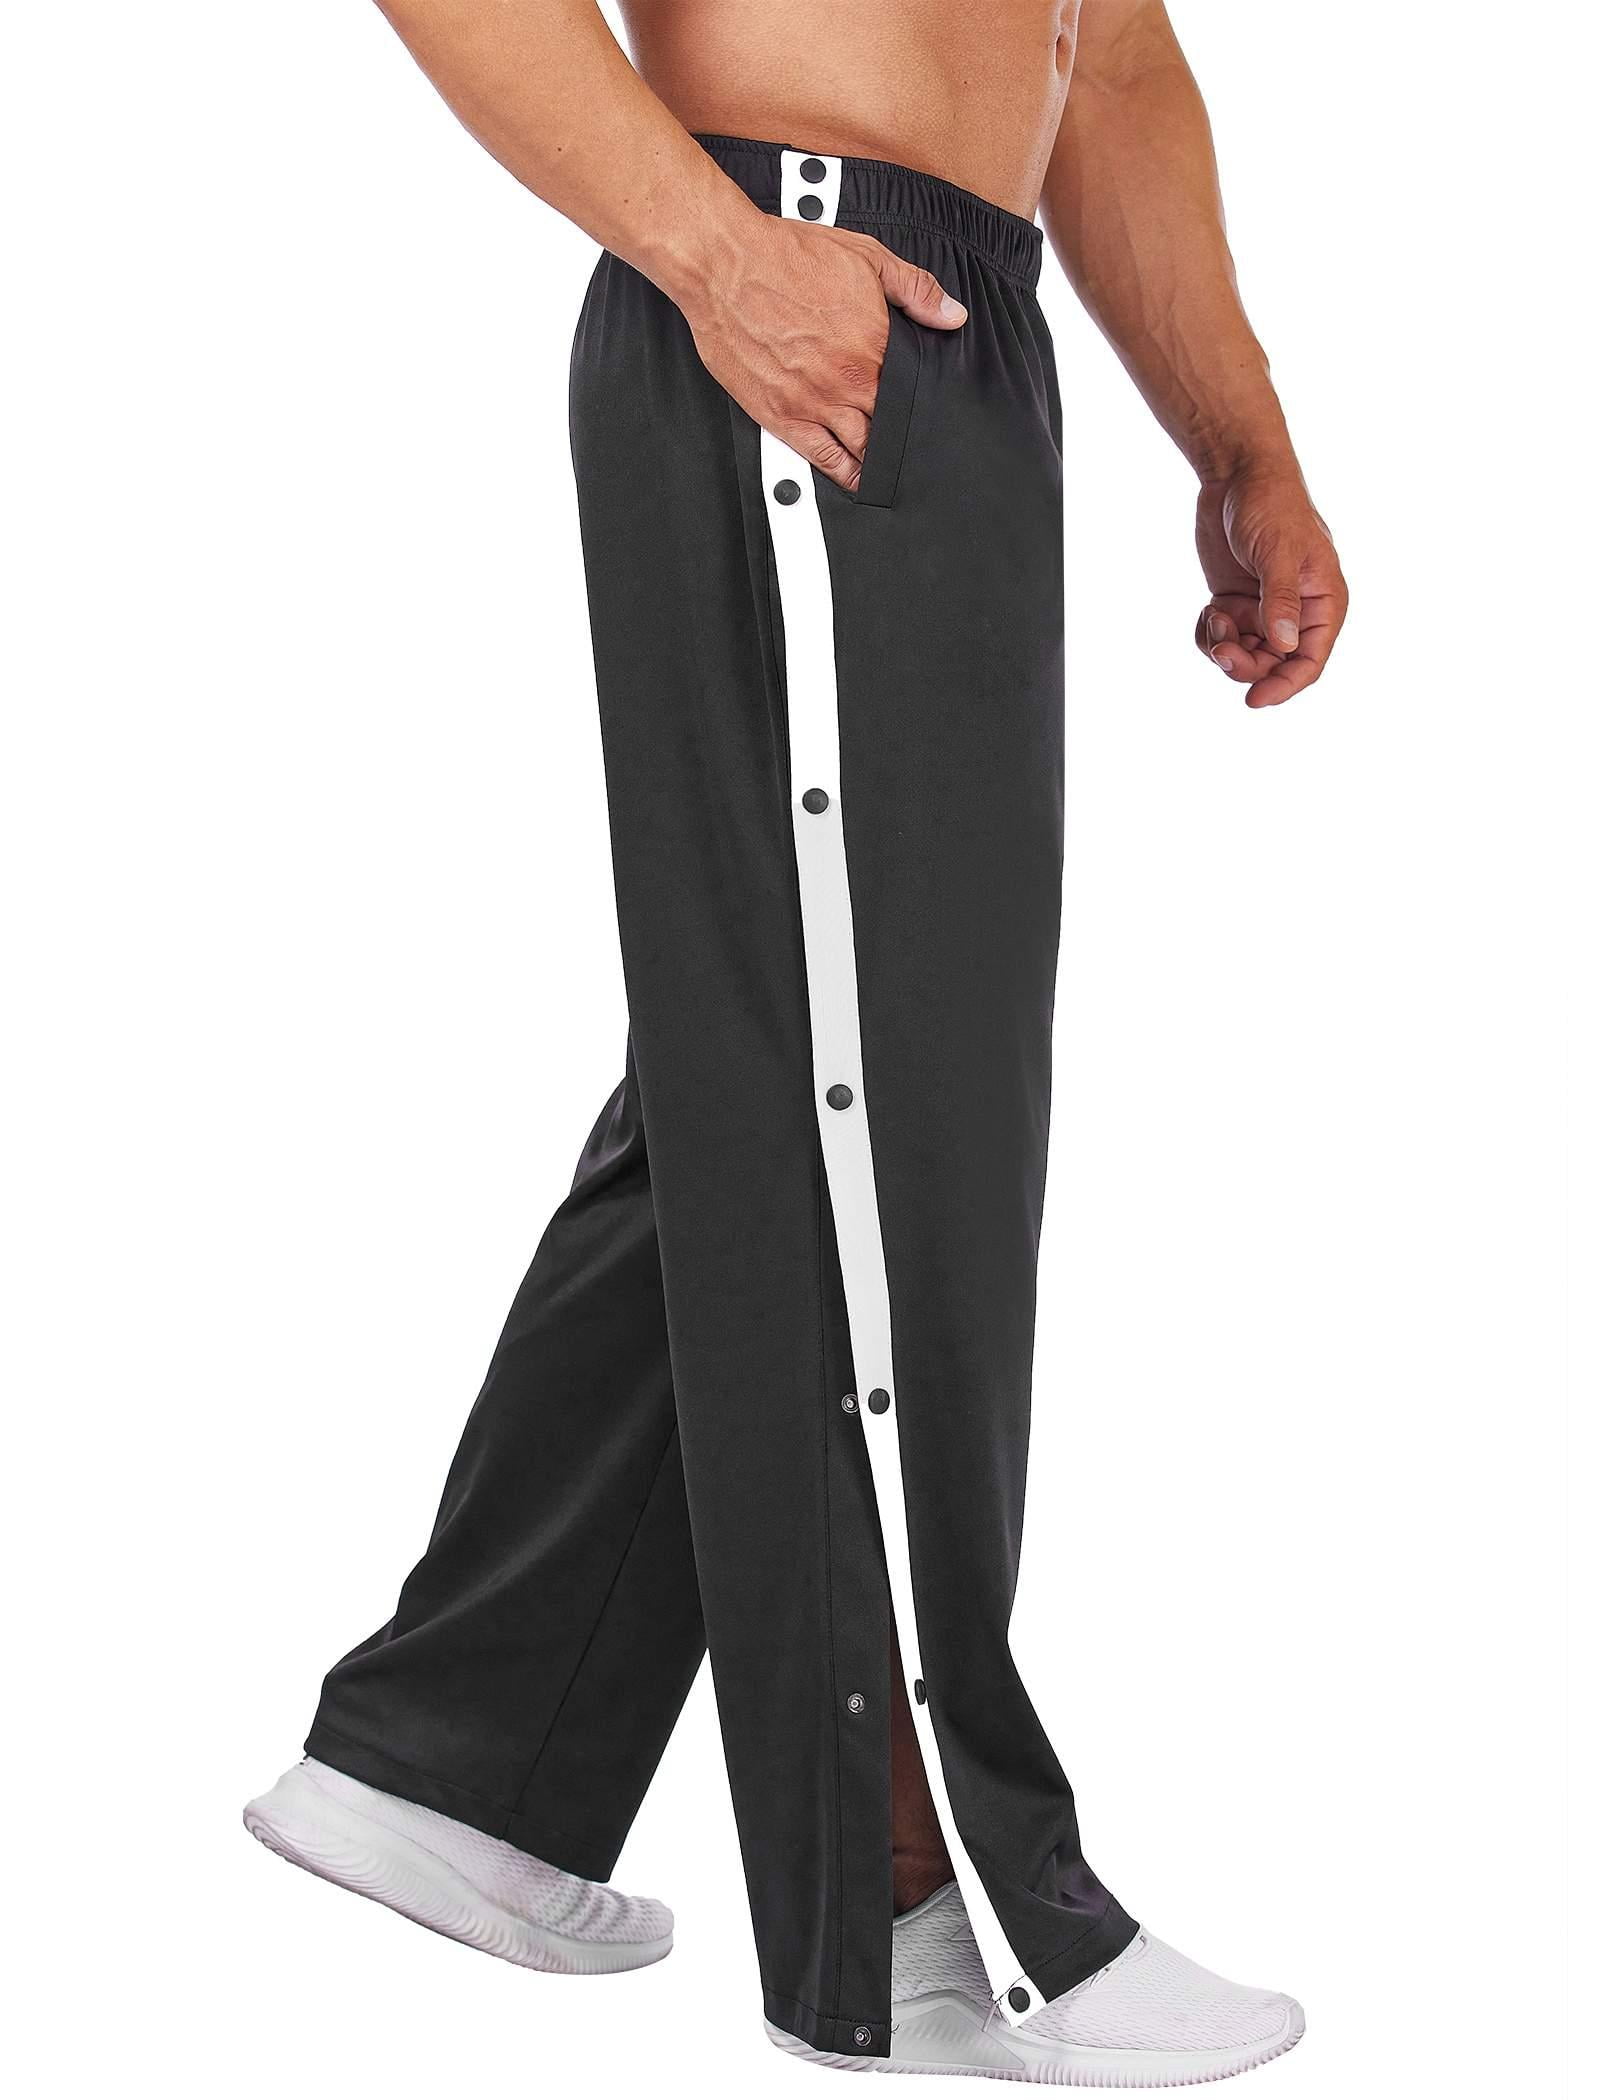 TECMIF Tear Away Basketball Pants High Split Snap Button Pants for Men Women Loose Fit Sweatpants Casual Workout